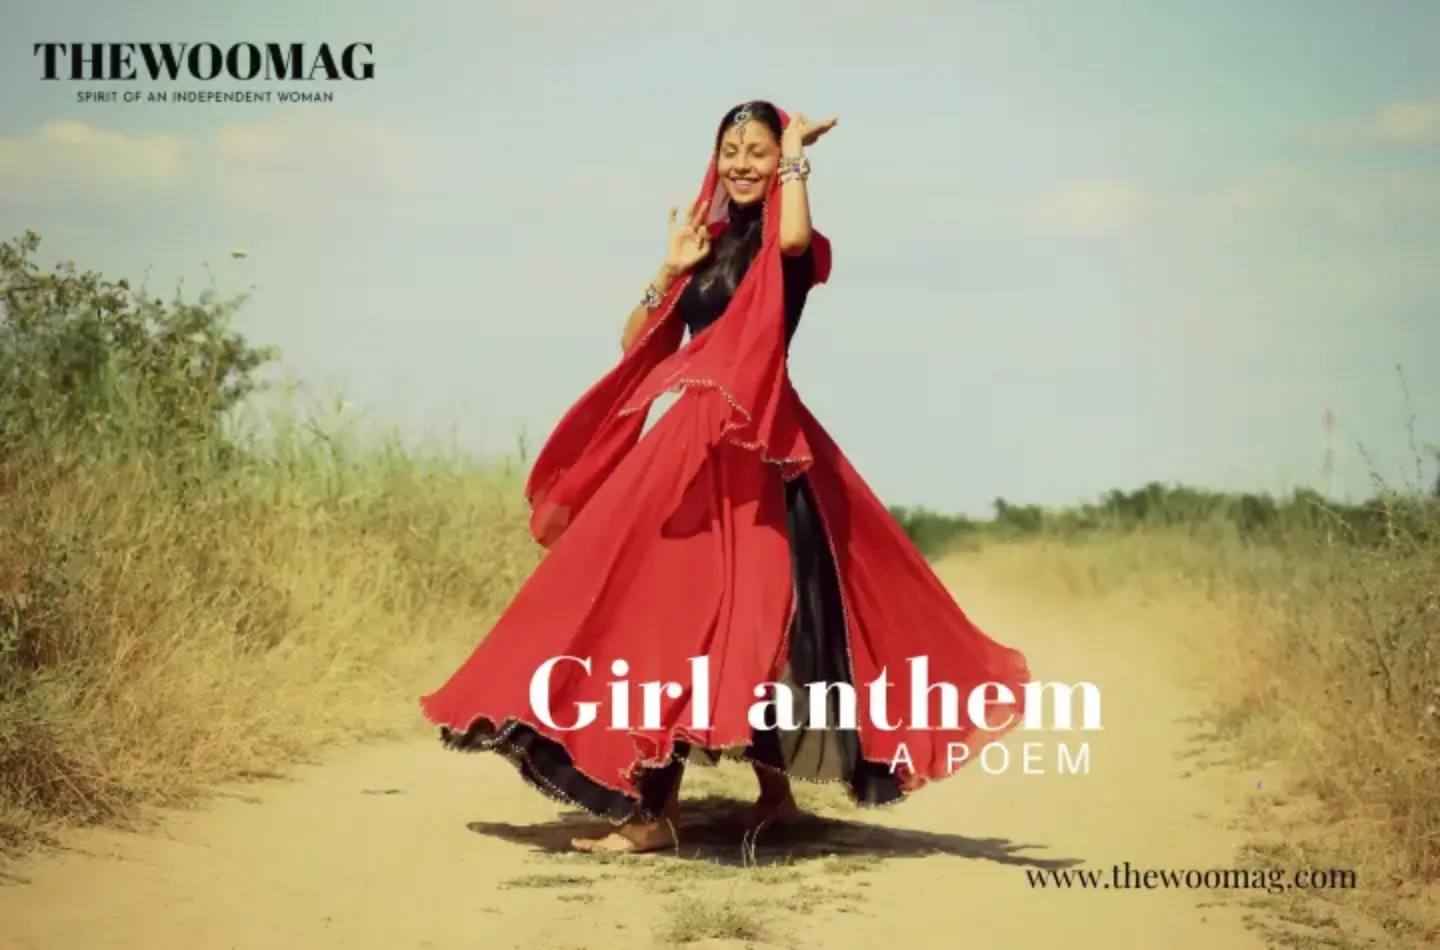 Empowering Girl Anthem: A poem